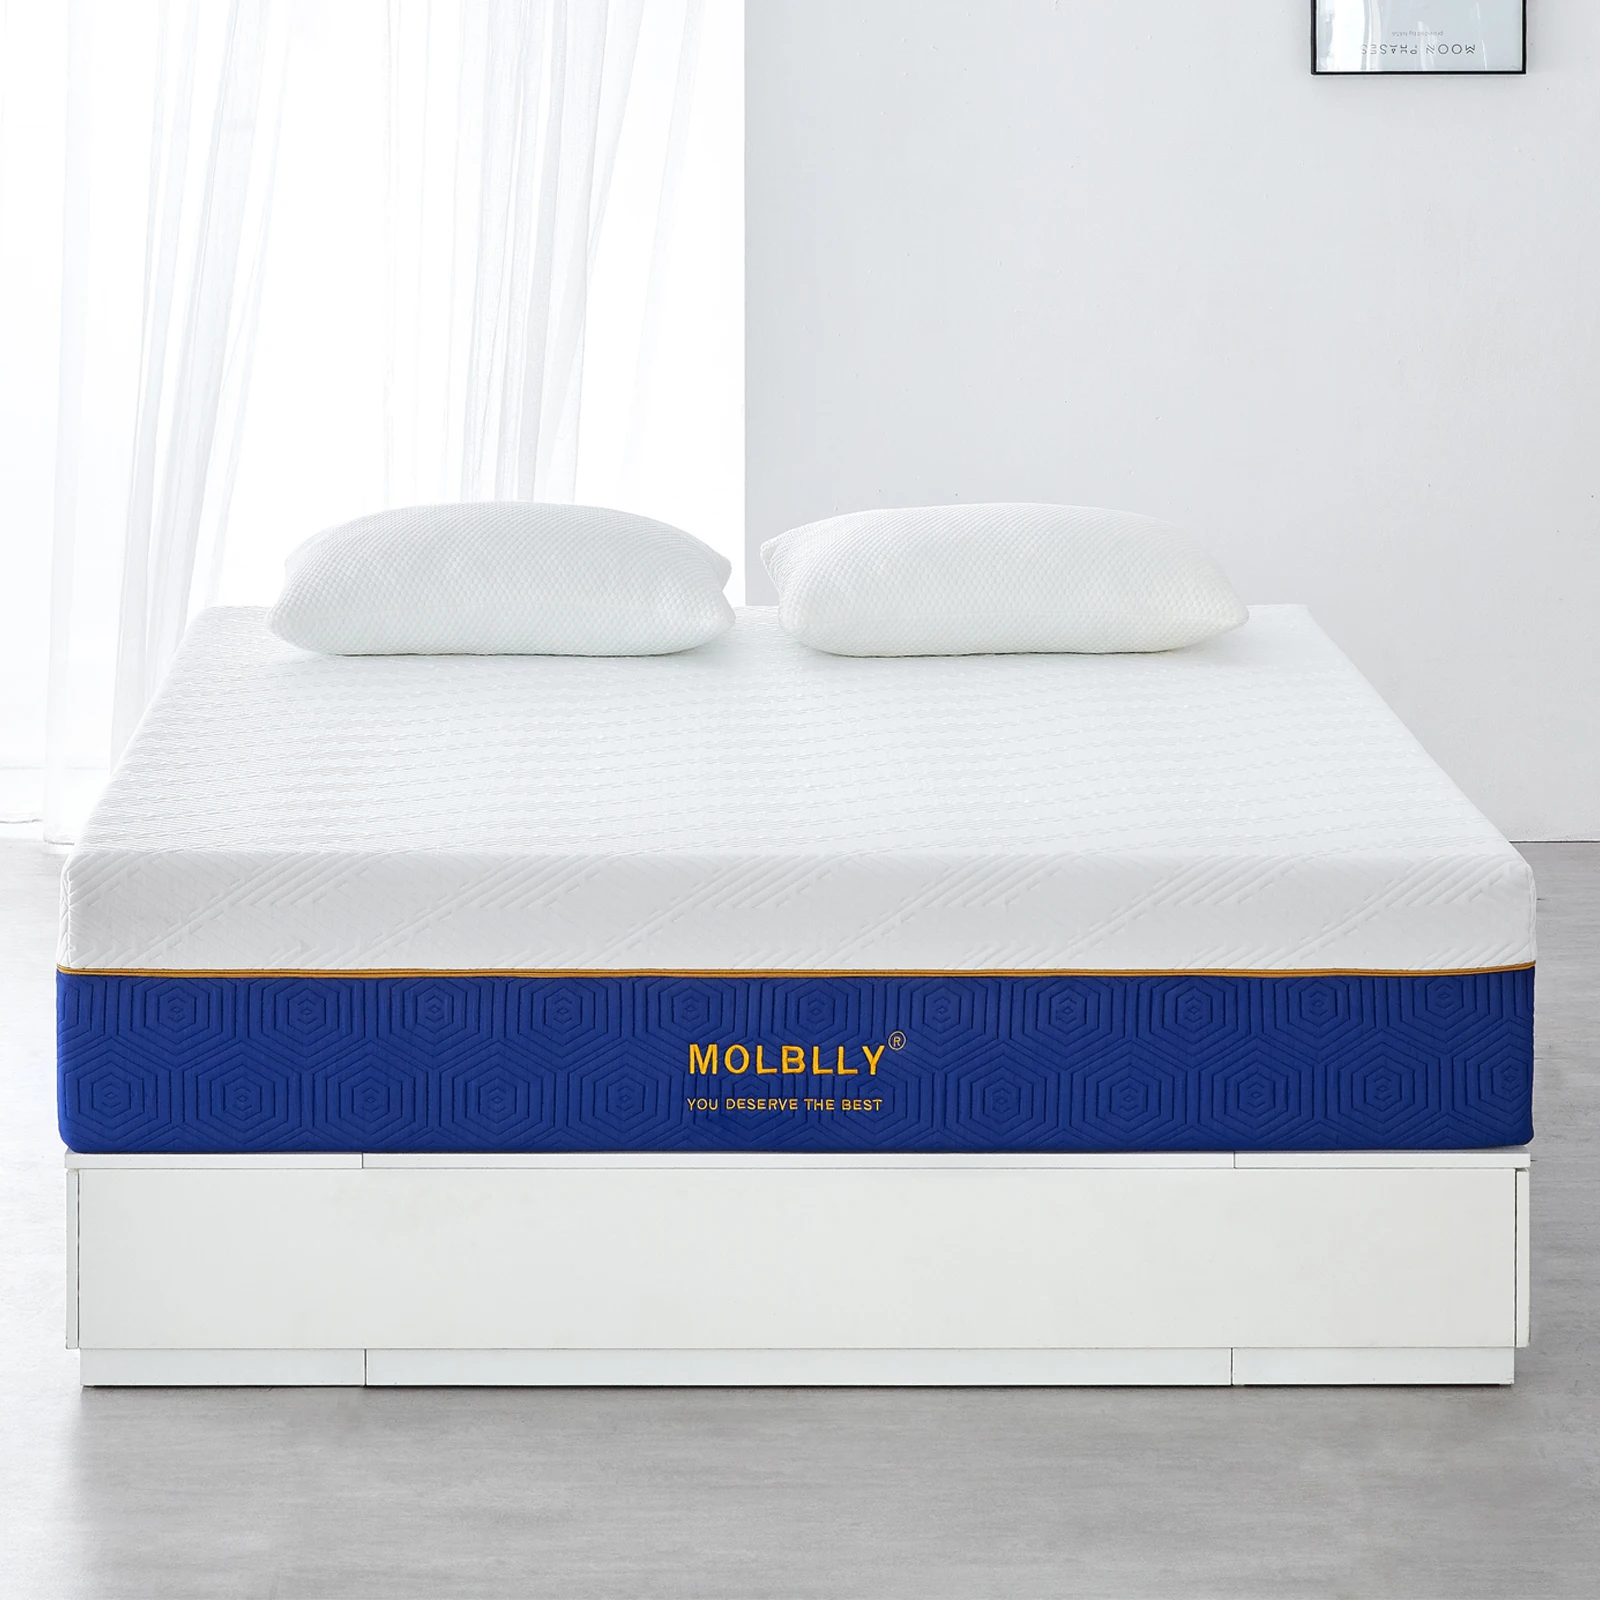 Molblly 10 inch Cooling-Gel Memory Foam Mattress Bed